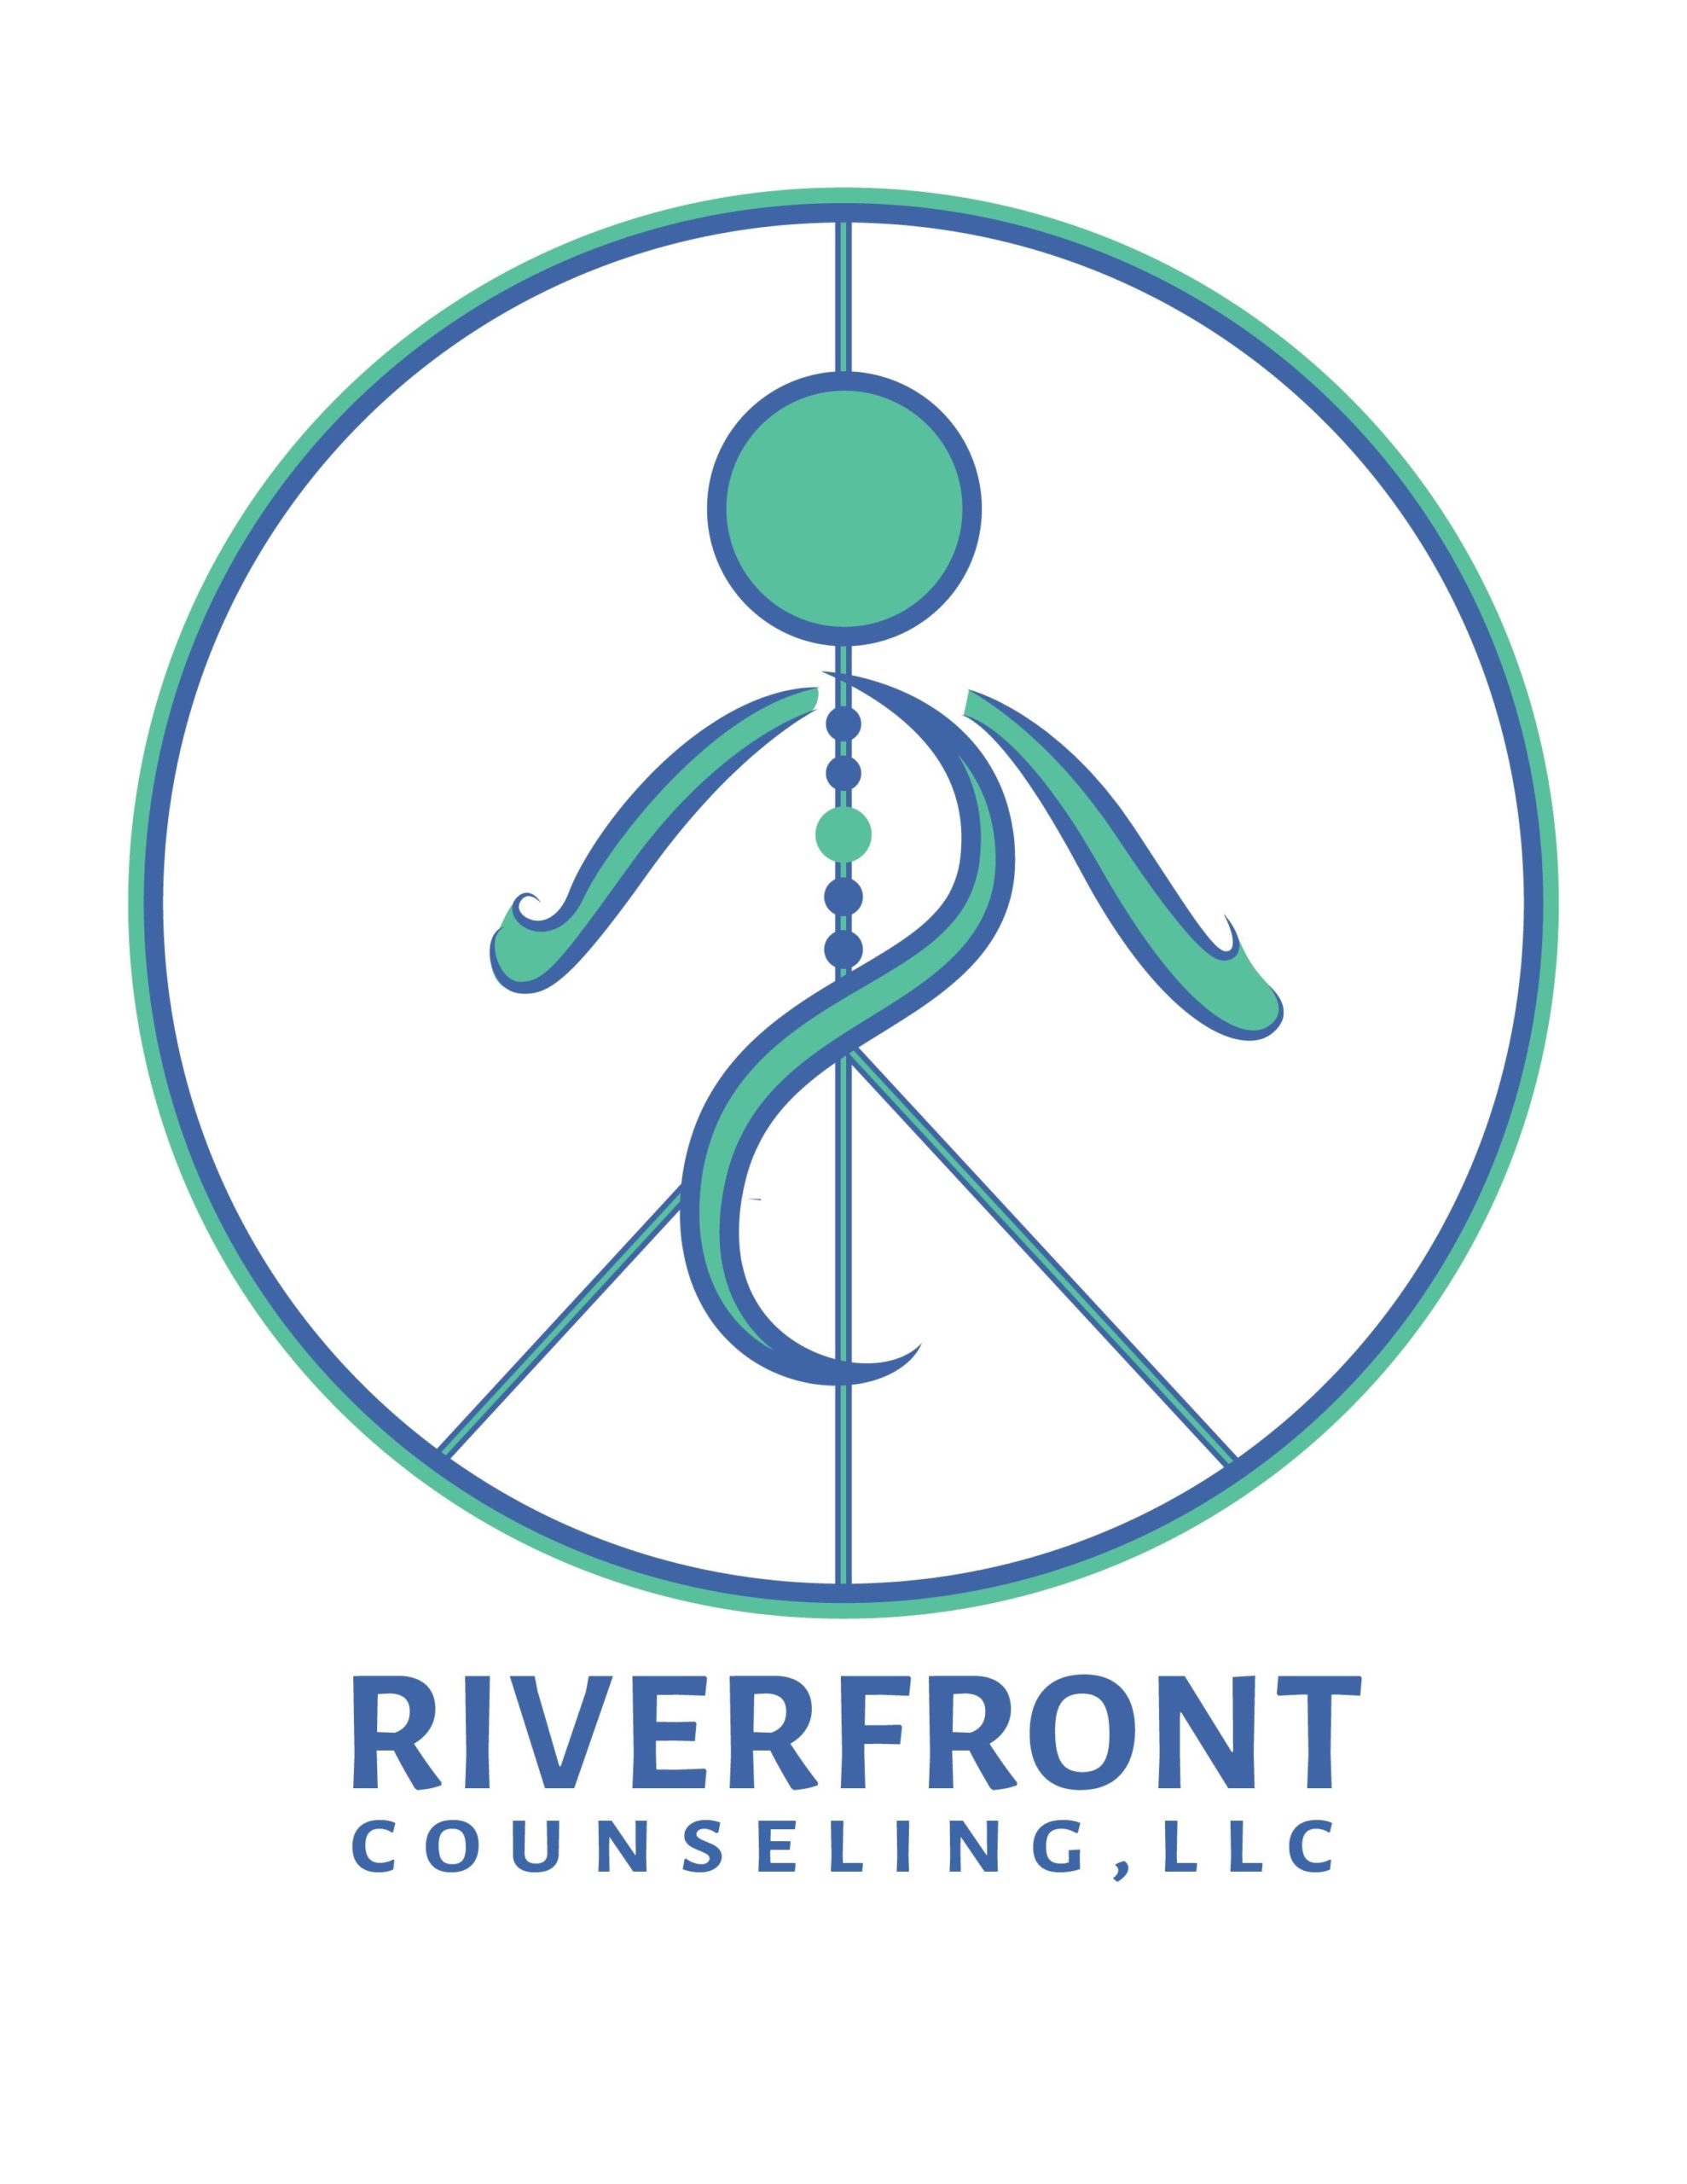 Riverfront Counseling